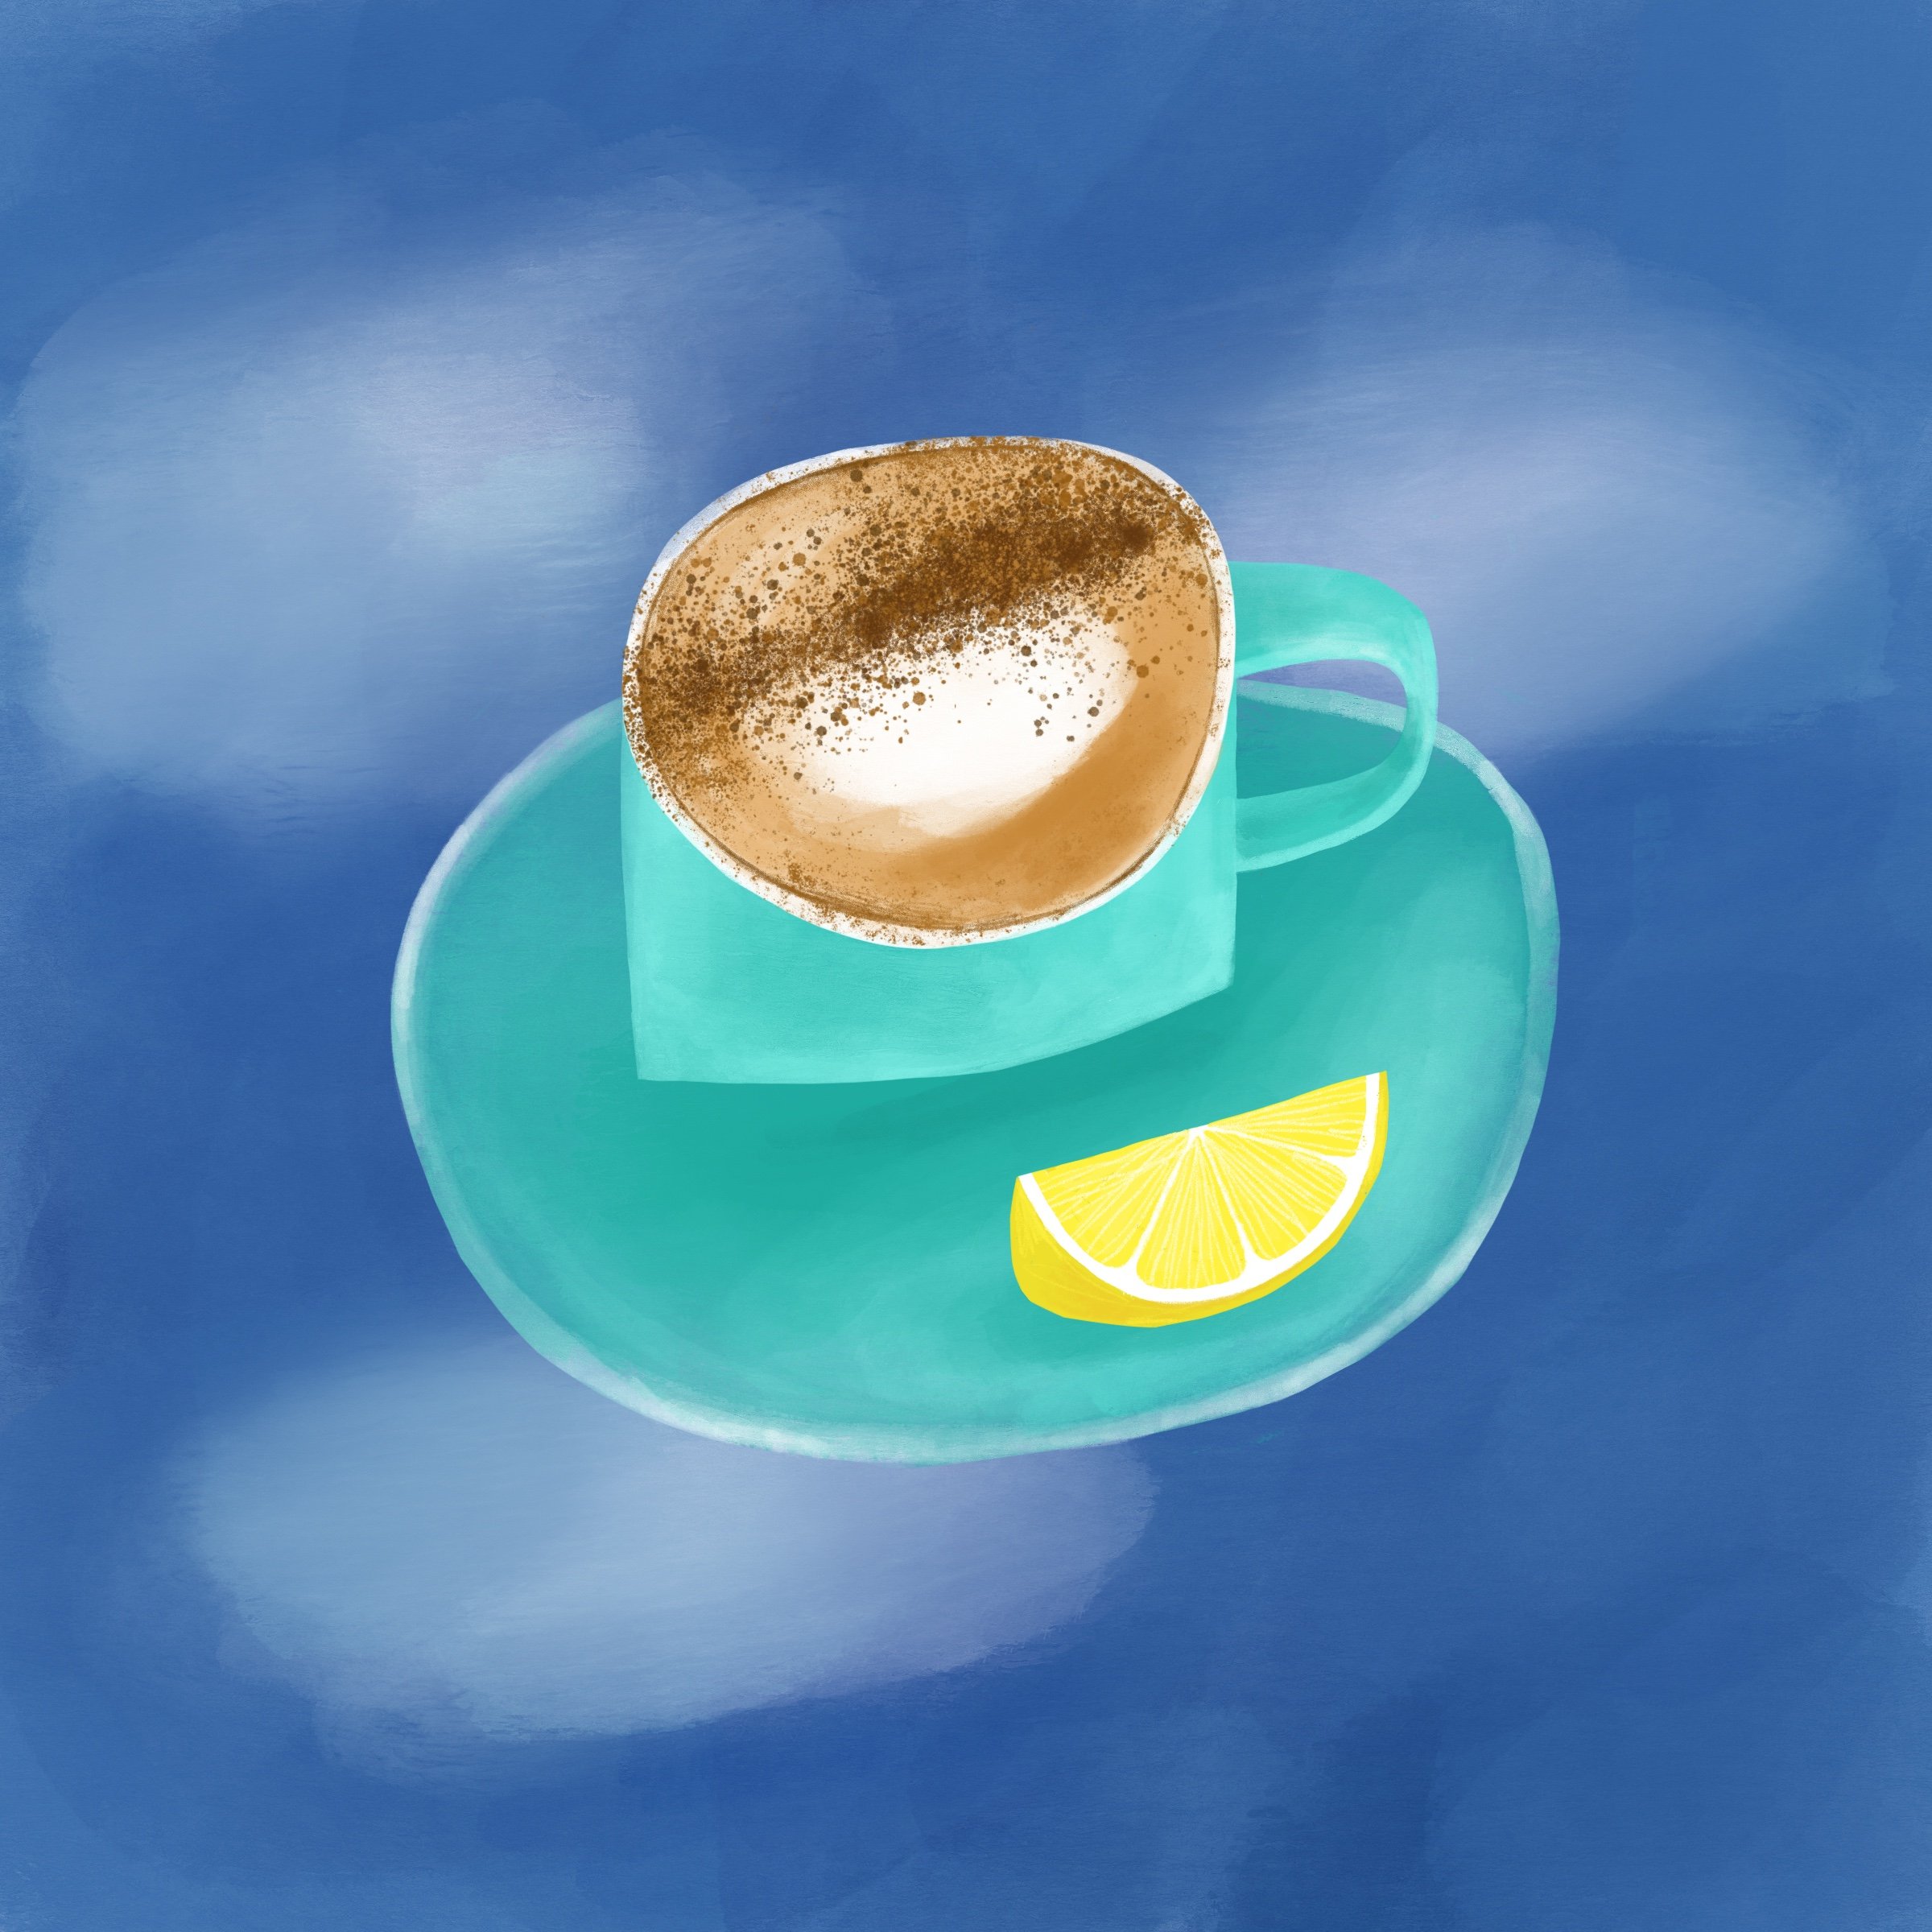 Illustrated cappuccino